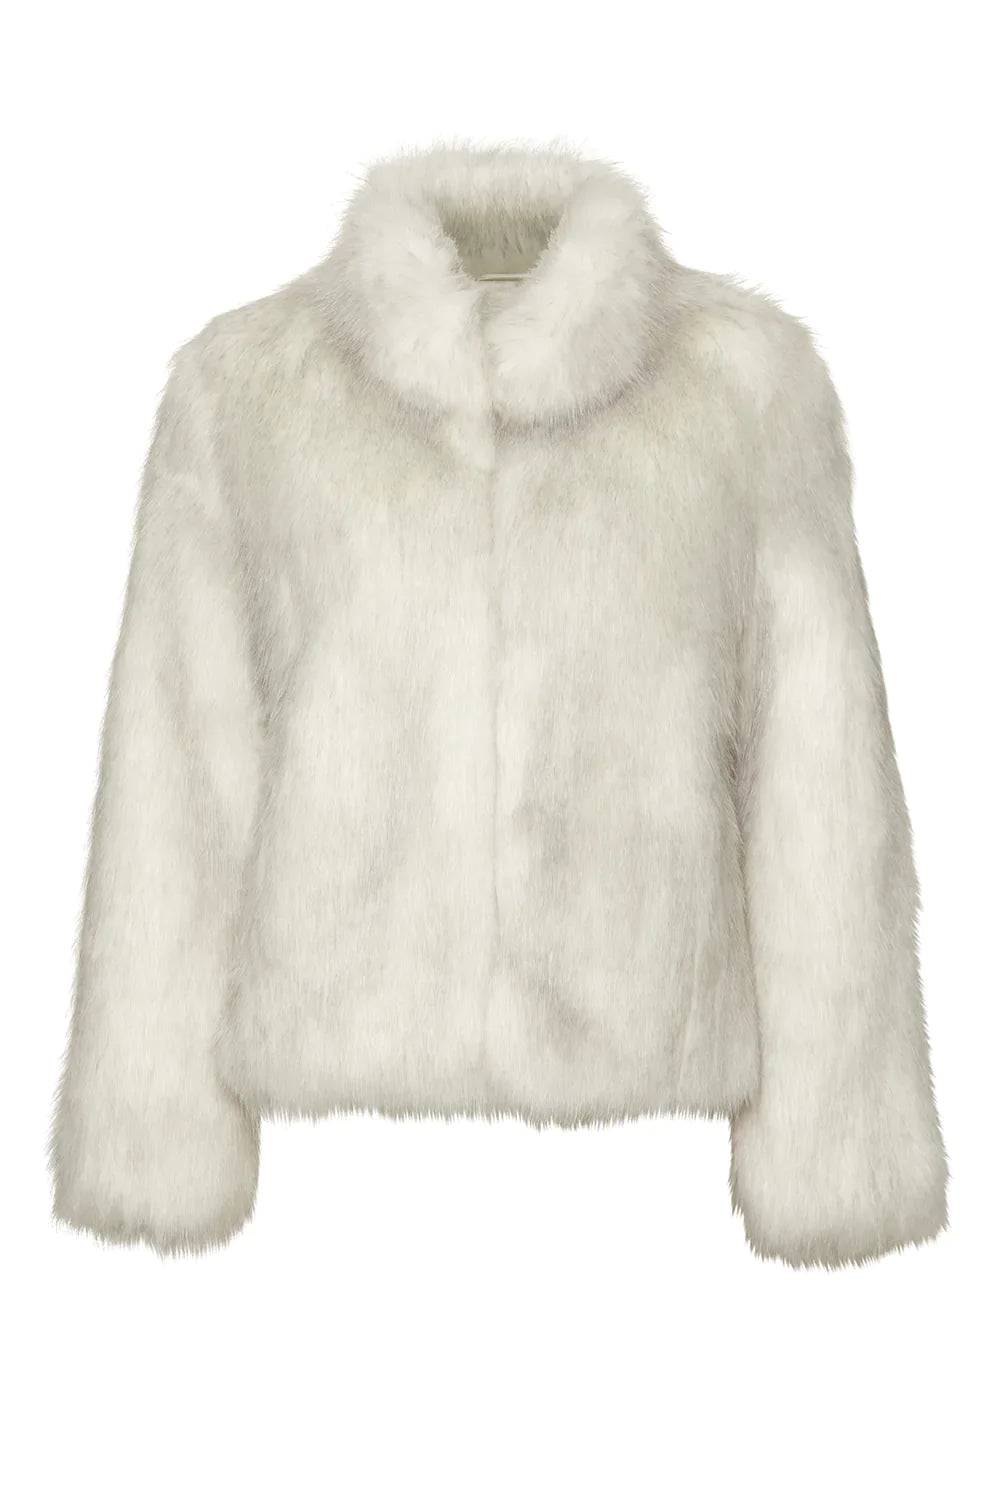 Unreal Fur Short White Cheetah Fur